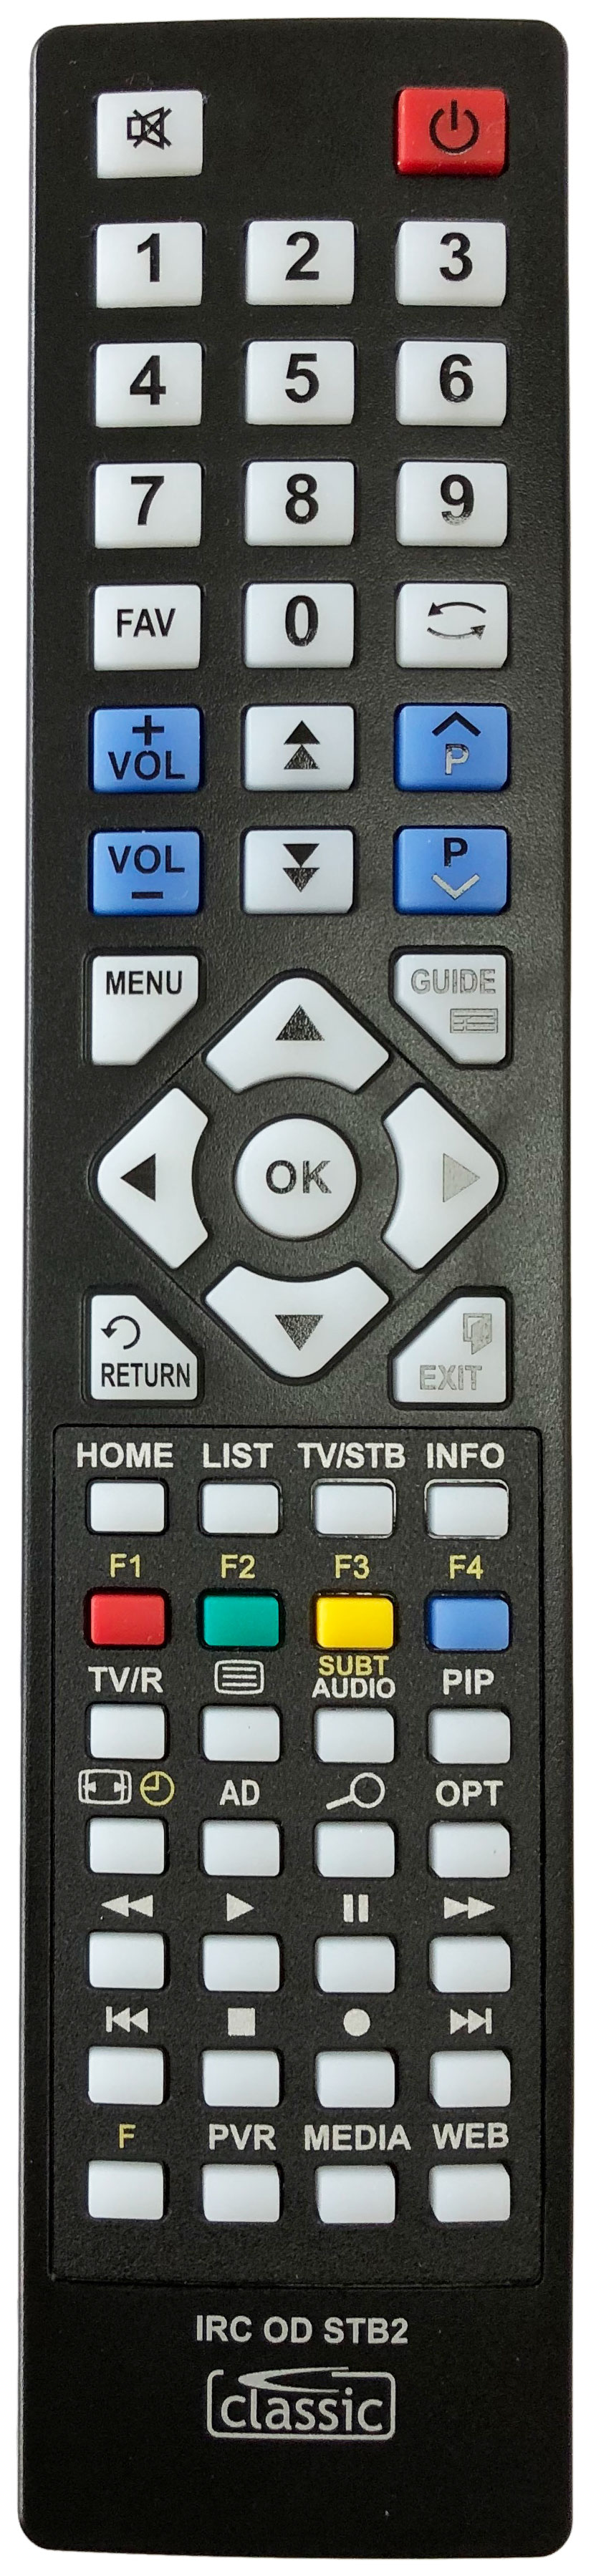 Humax RT-531 Remote Control Alternative